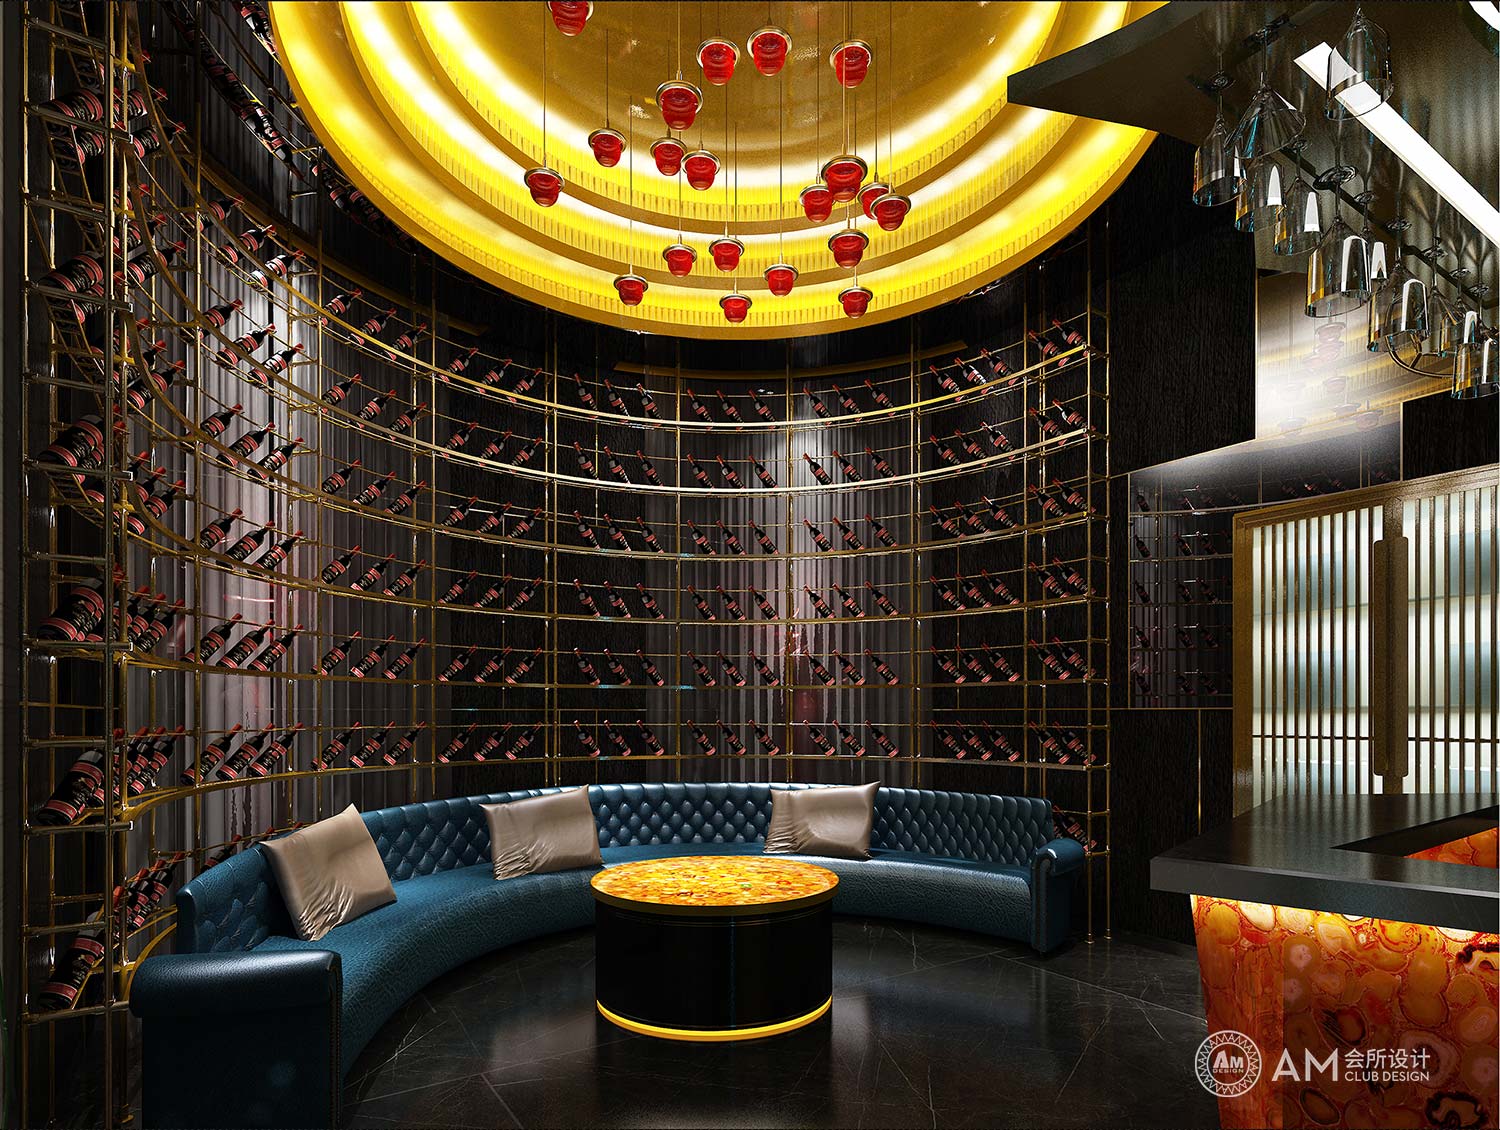 AM DESIGN | Baiziwan Top Spa Club wine storeroom design